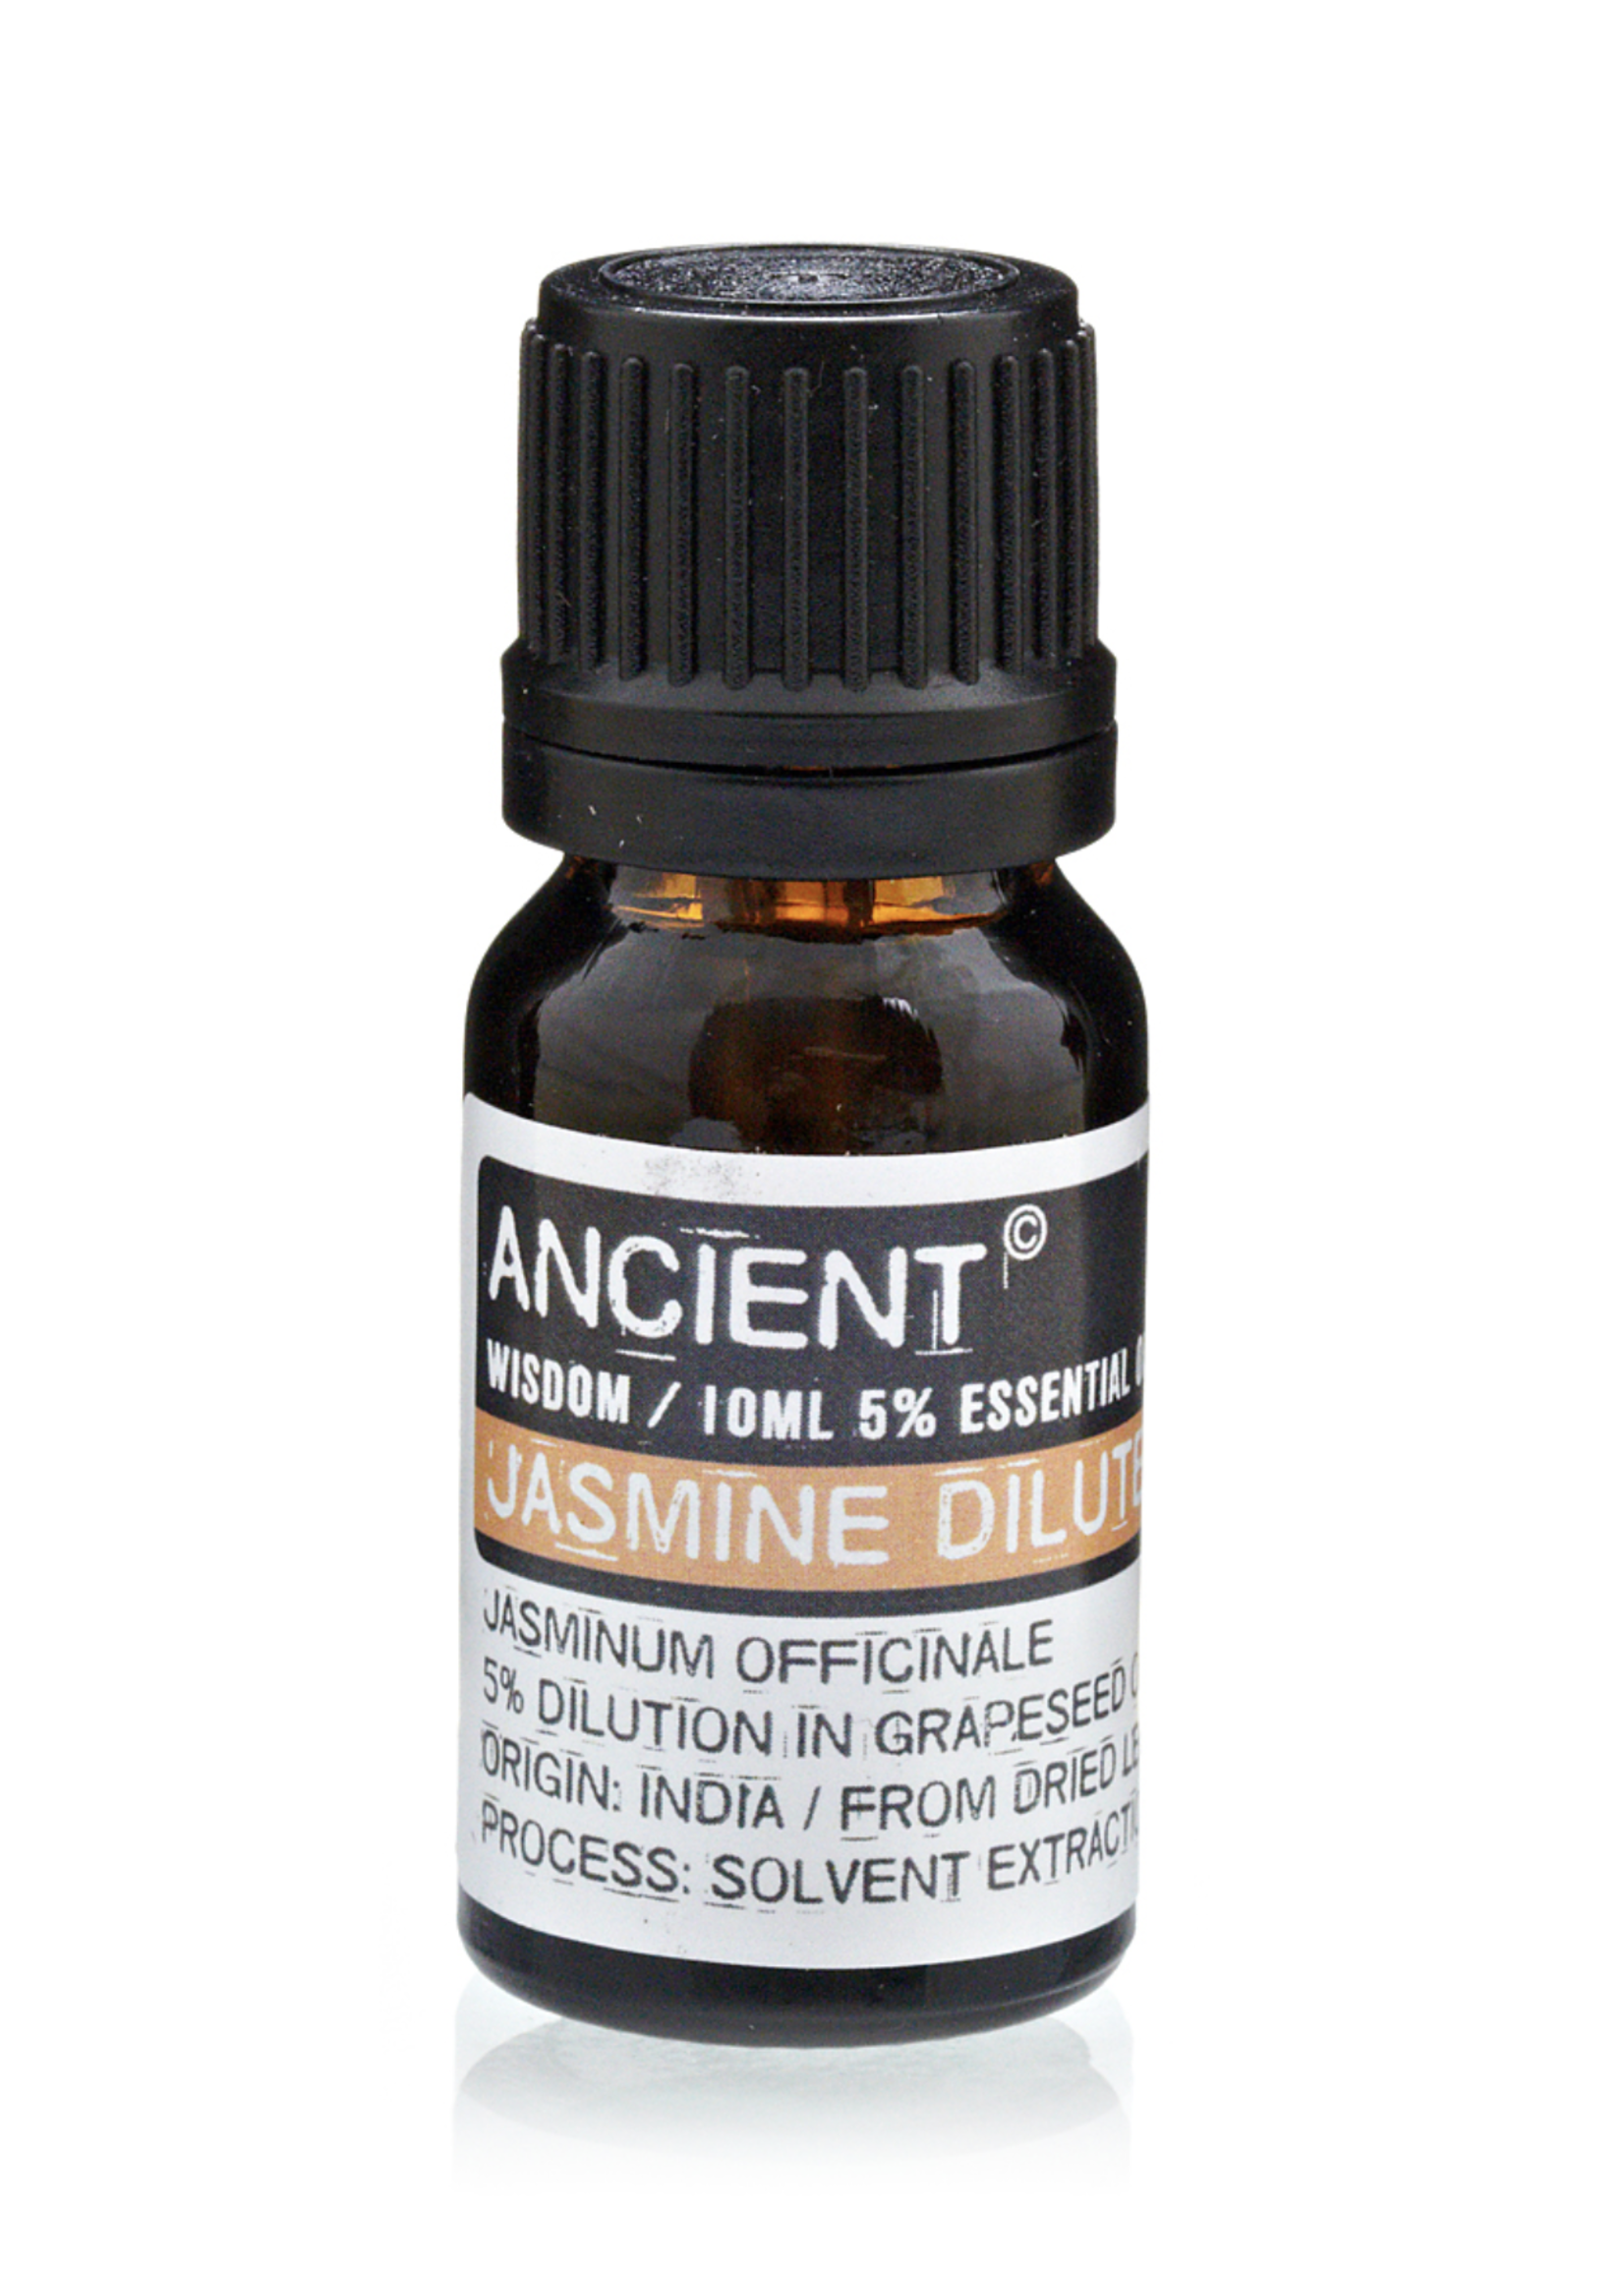 Ancient Wisdom Jasmine Dilute Essential Oil 10ml